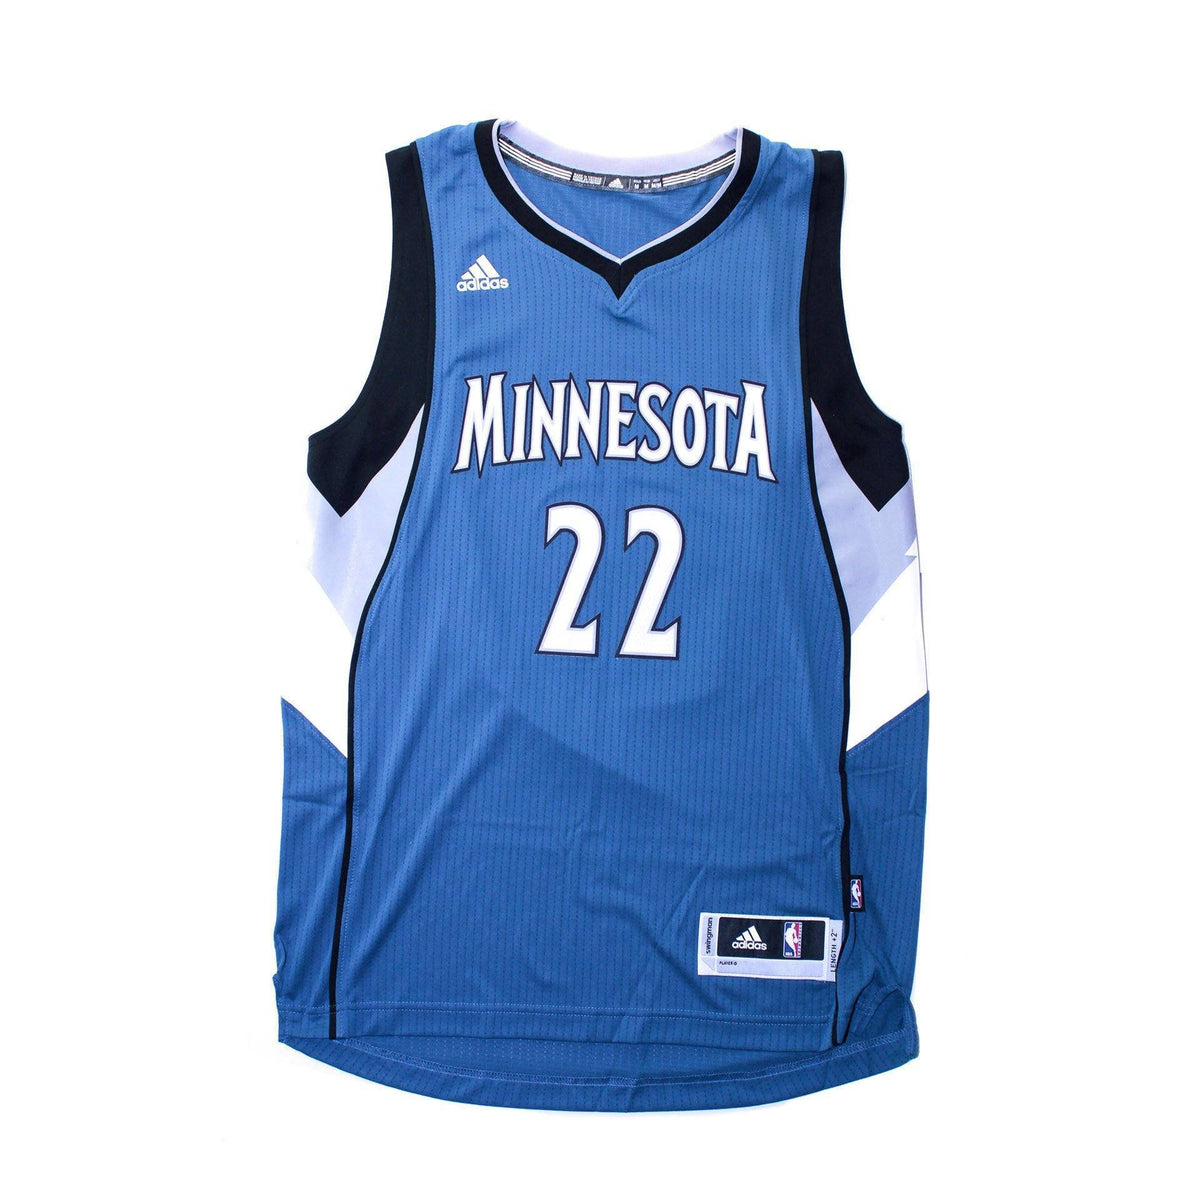 Adidas Andrew Wiggins Minnesota Timberwolves #22 Nba Jersey Away Blue A69836 - CLOTHING - Solestop.com - Canada